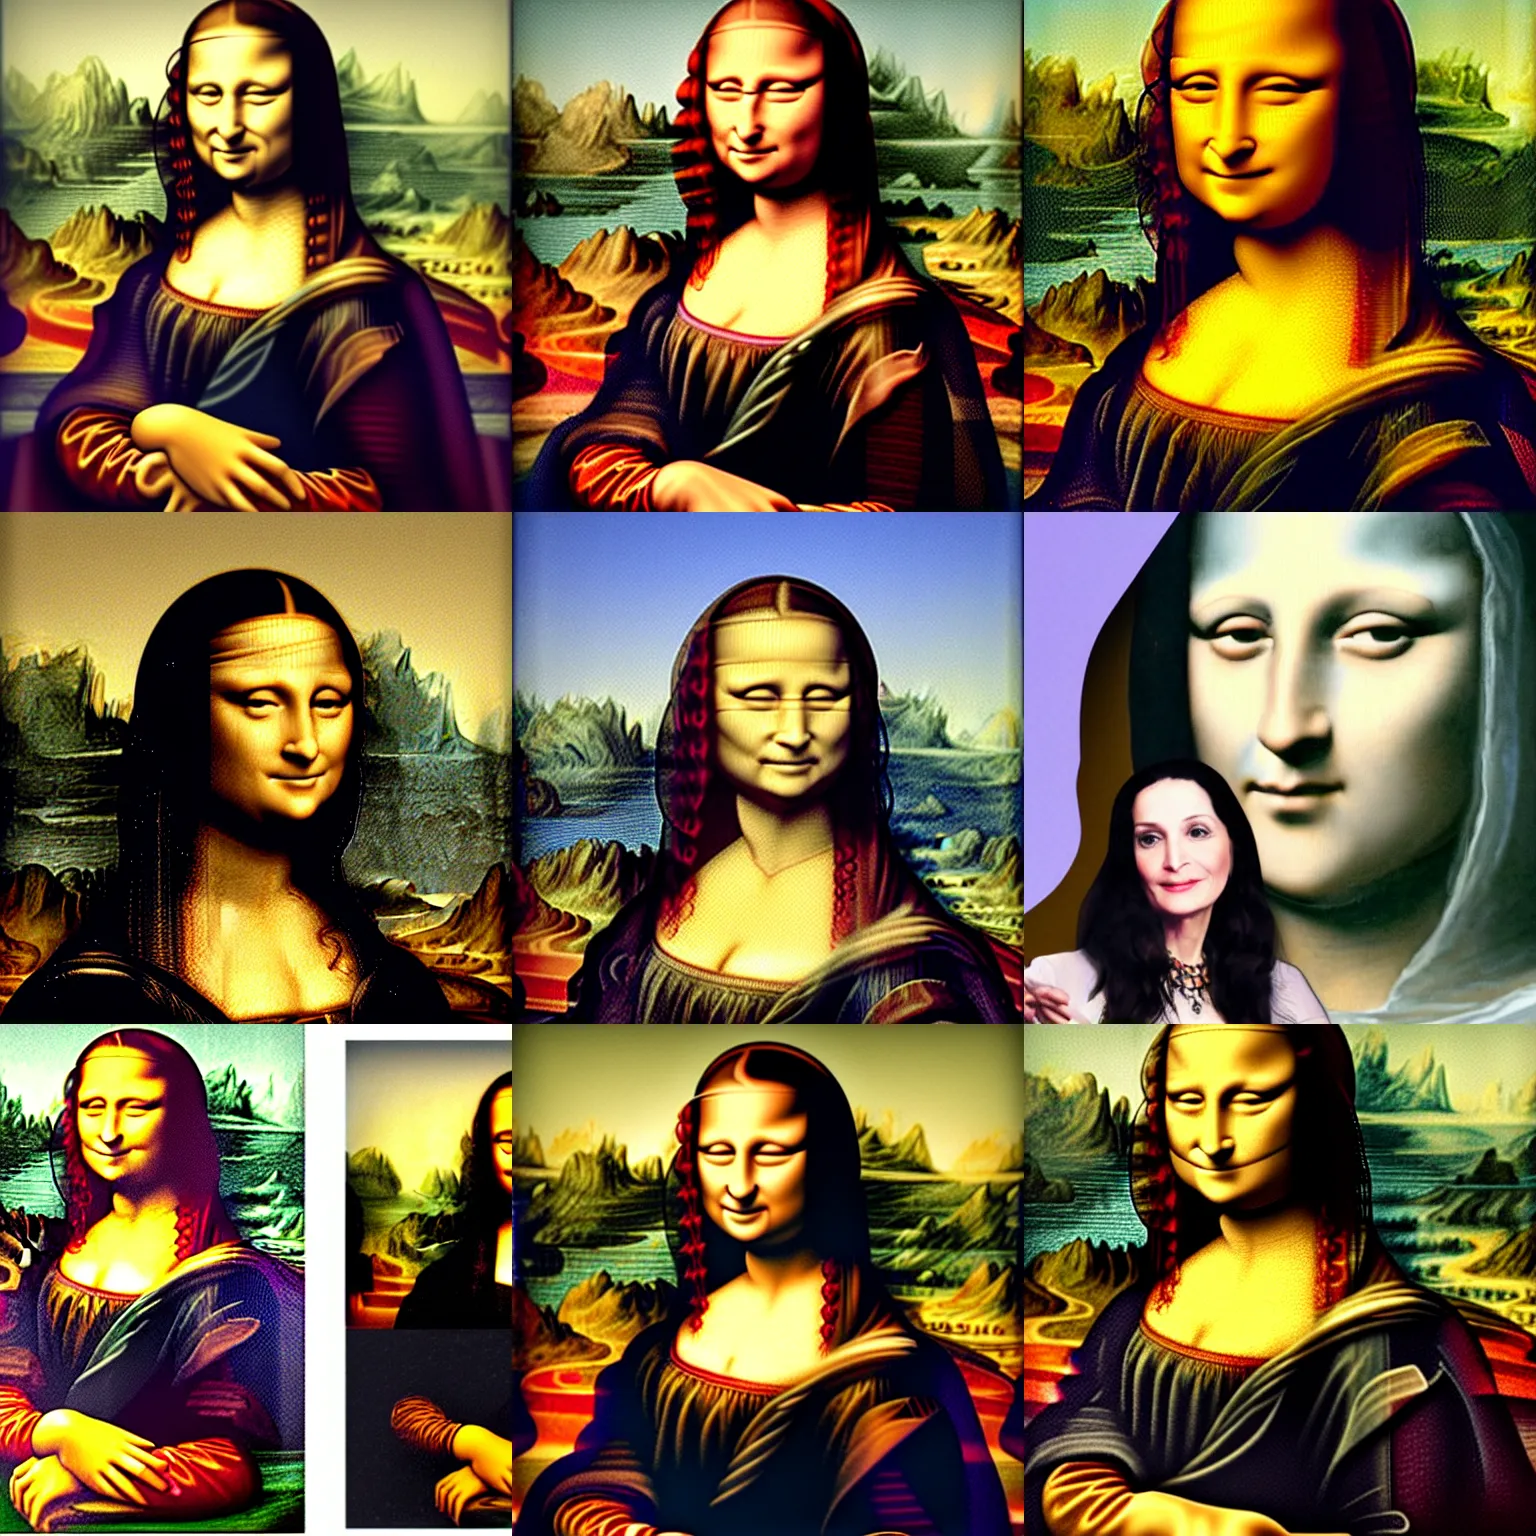 Prompt: Mona Lisa as a Steven Colbert show guest